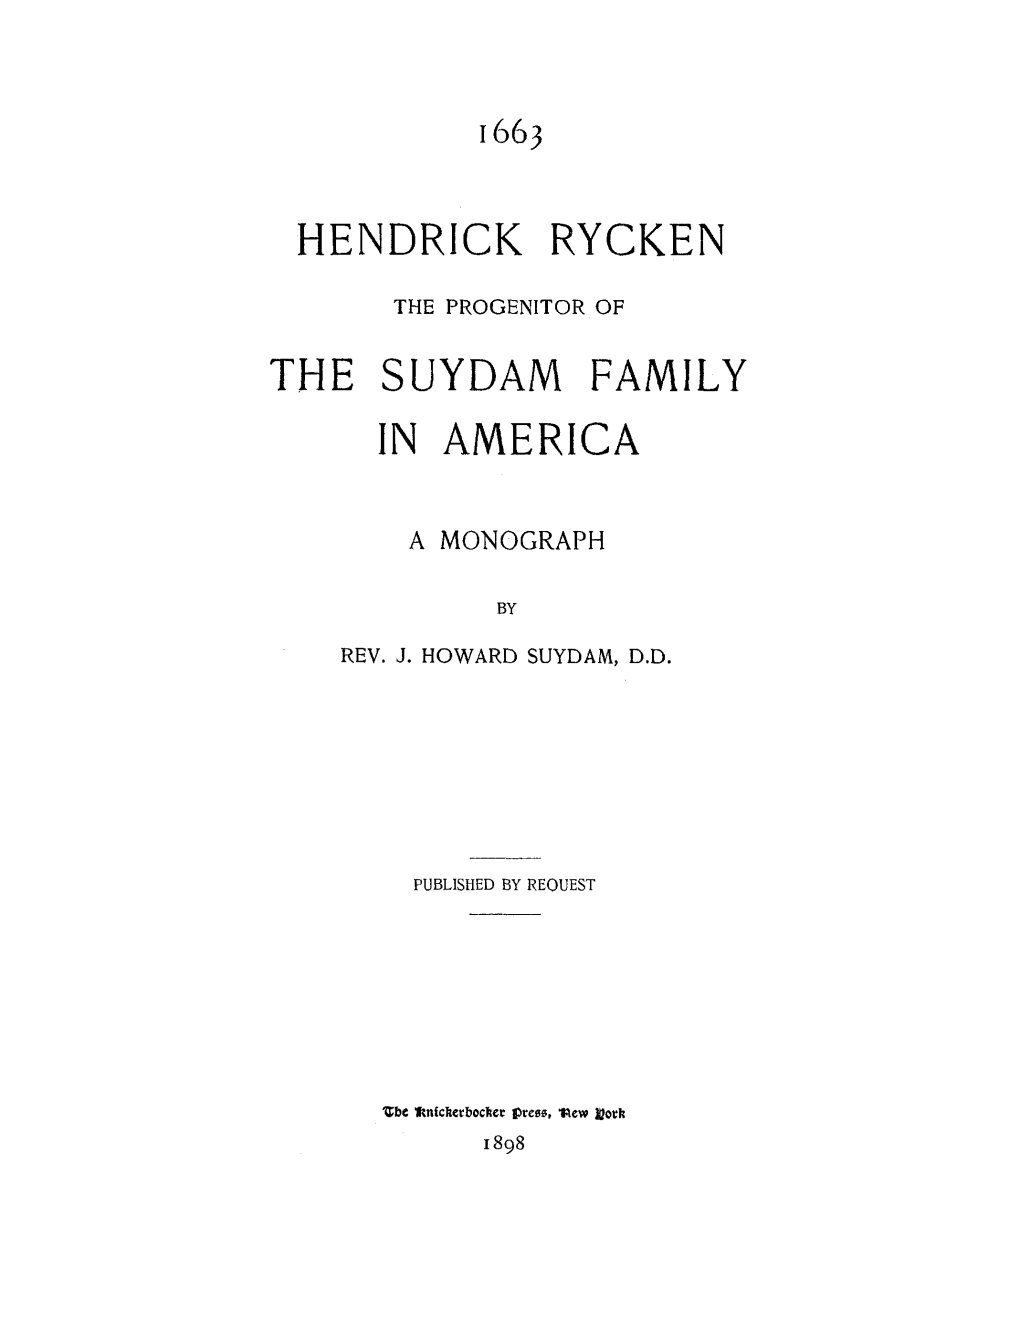 Hendrick Rycken the Suydam Family in America